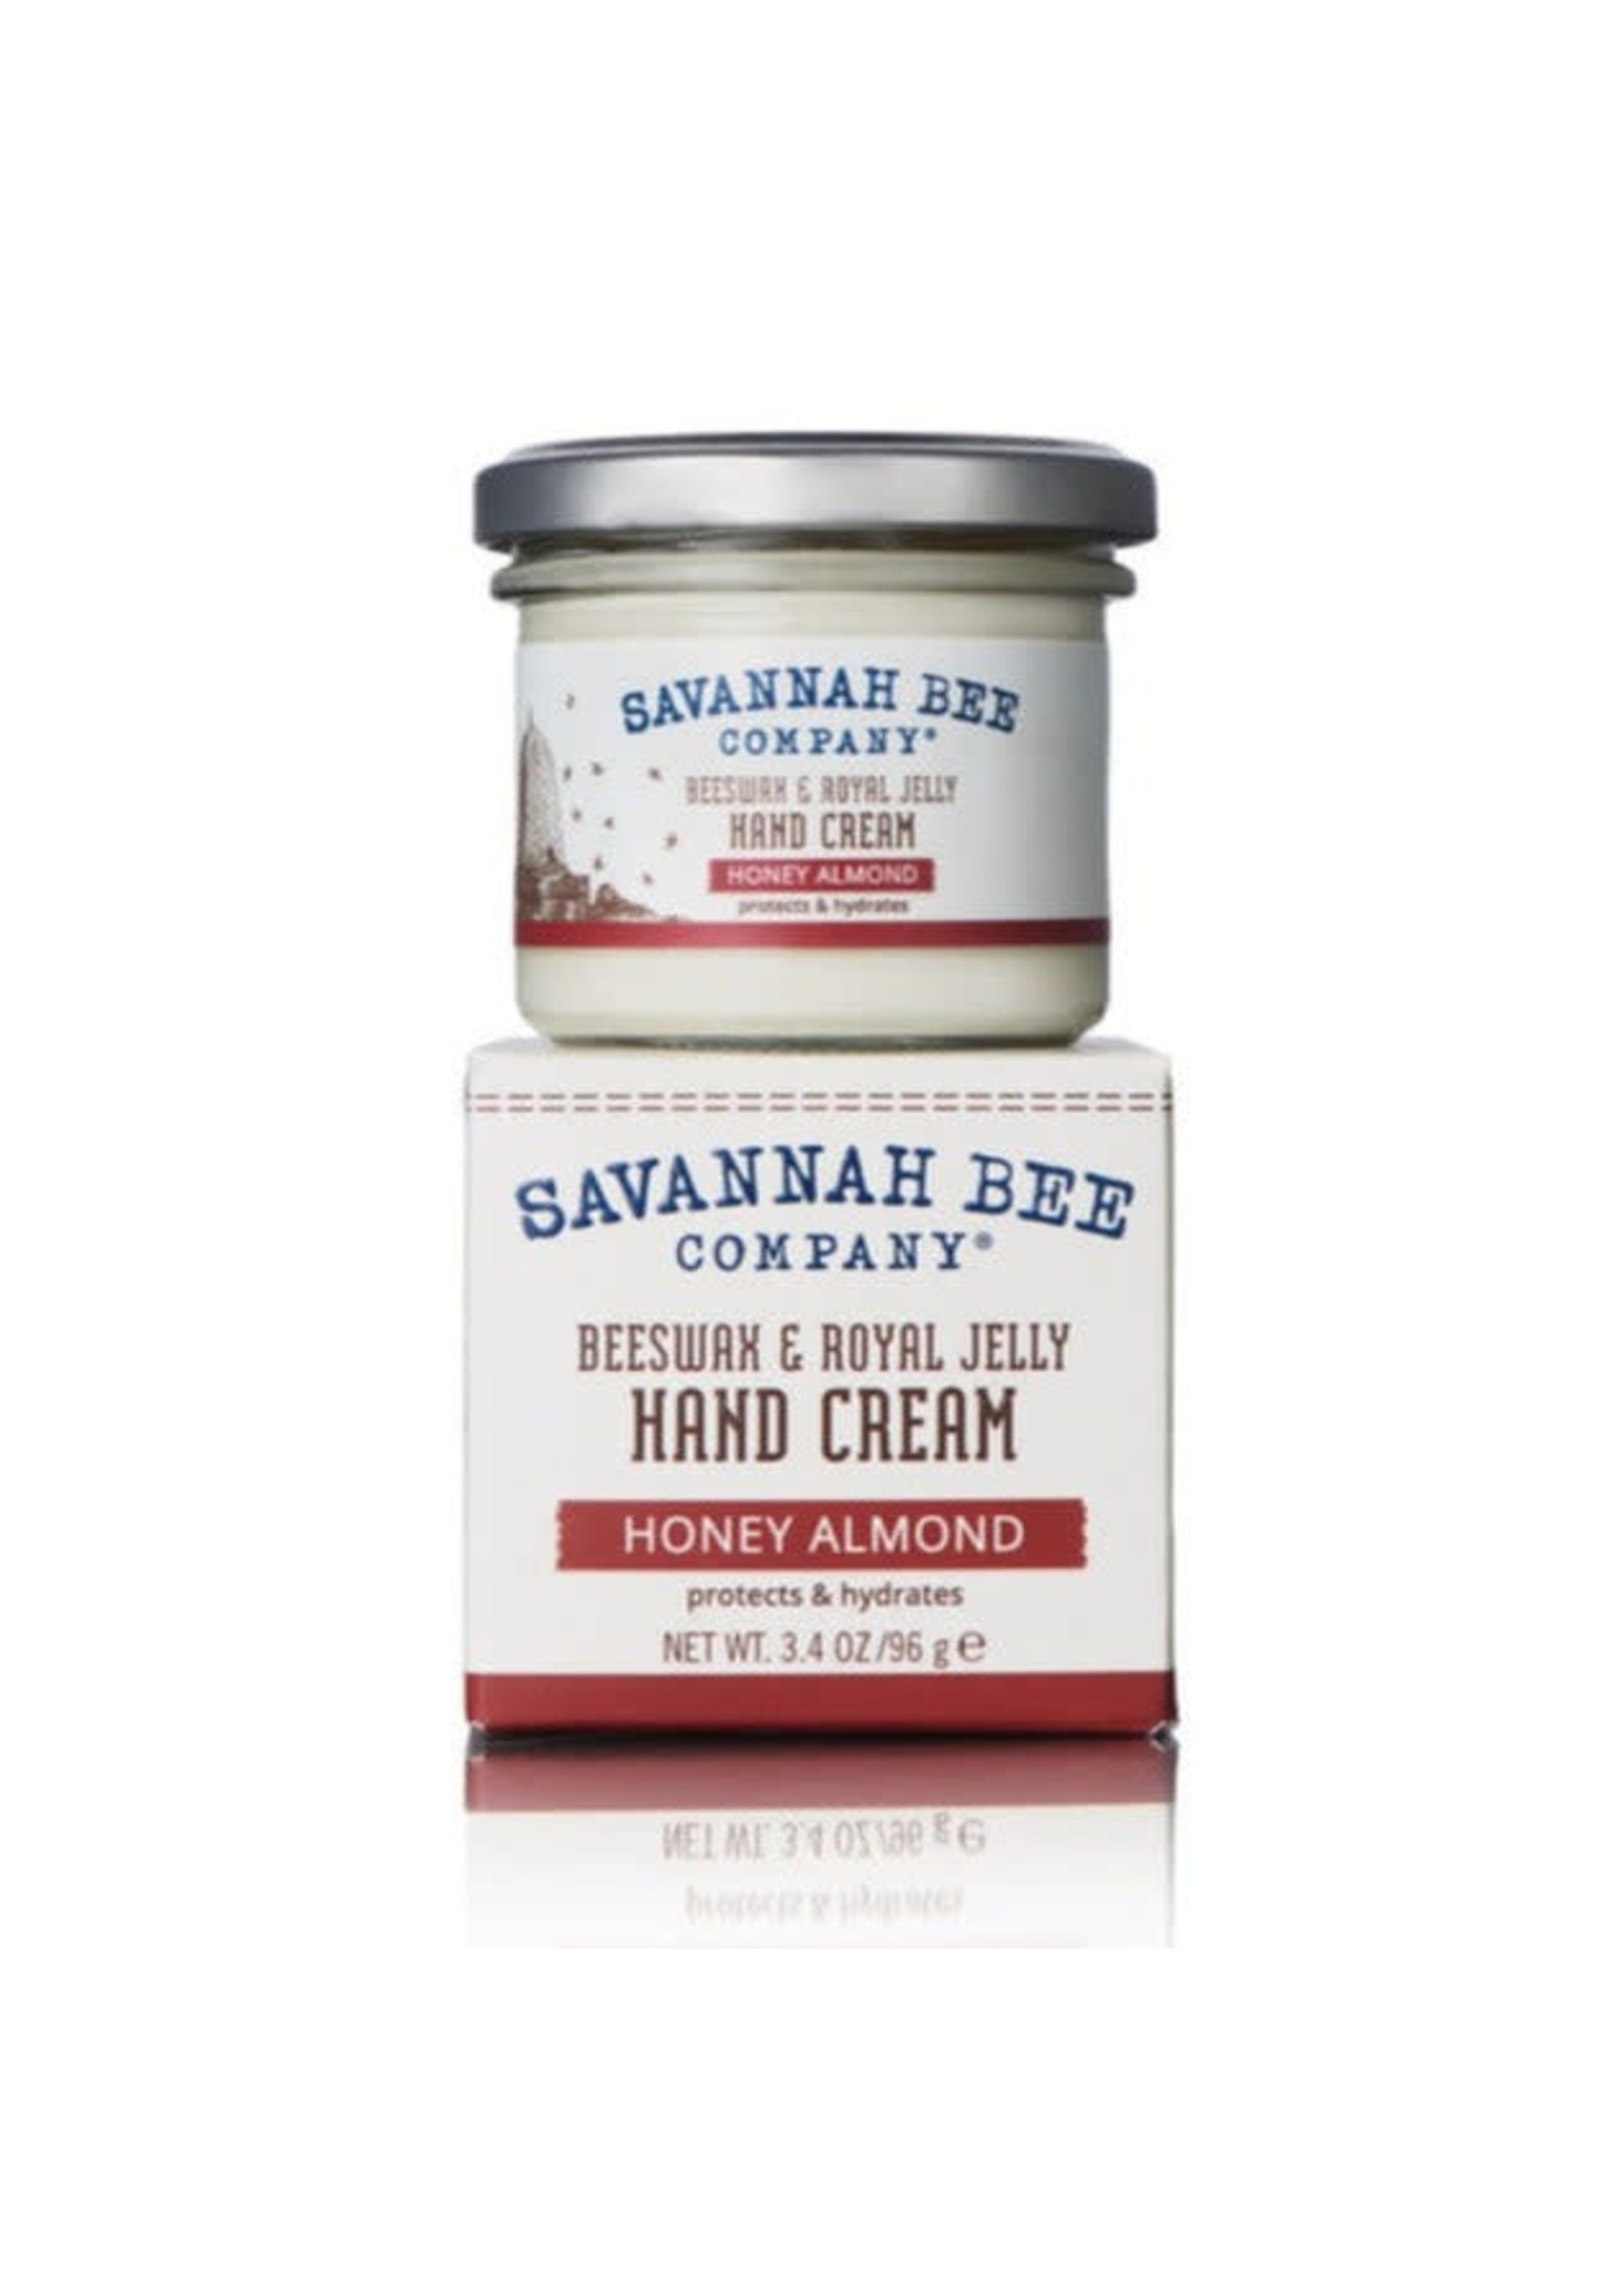 Savannah Bee Company Beeswax Handcream in a Jar - Honey Almond 3.4 oz